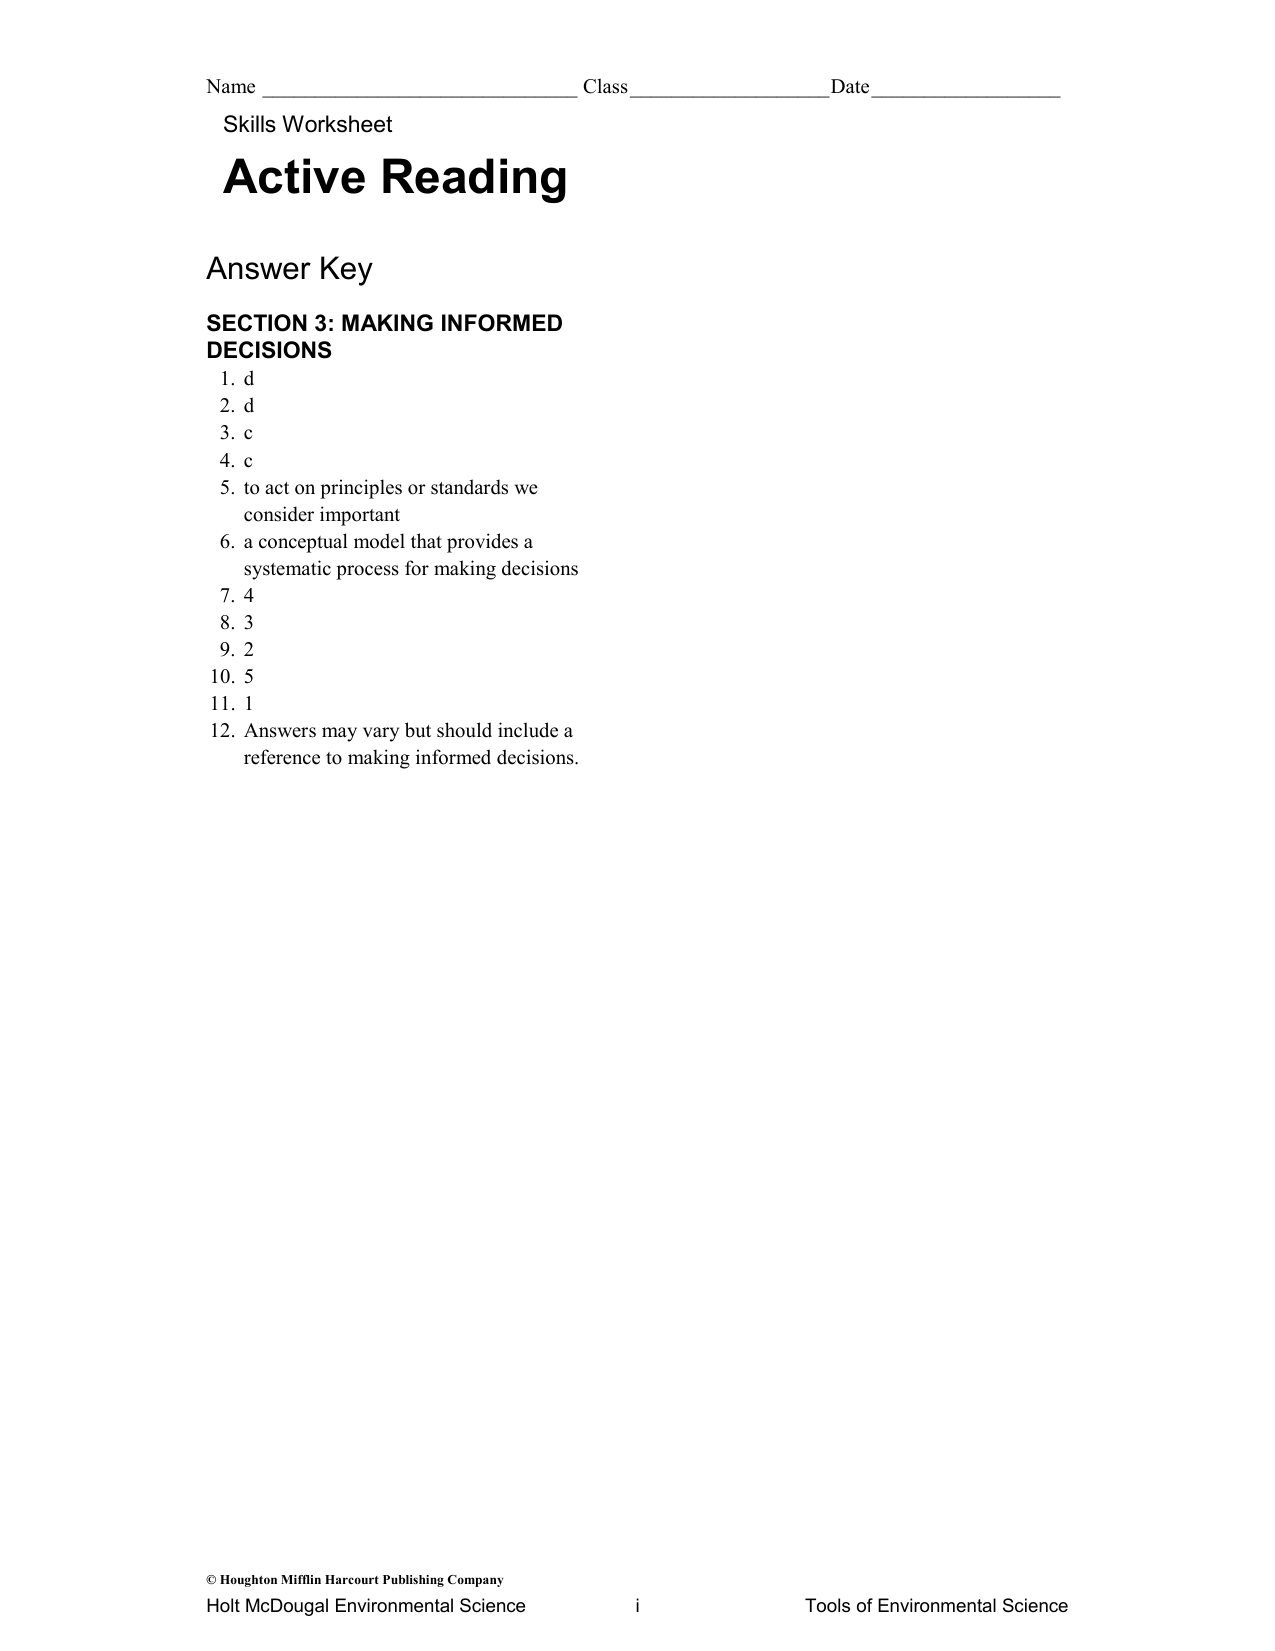 houghton-mifflin-harcourt-publishing-company-math-worksheet-answers-db-excel